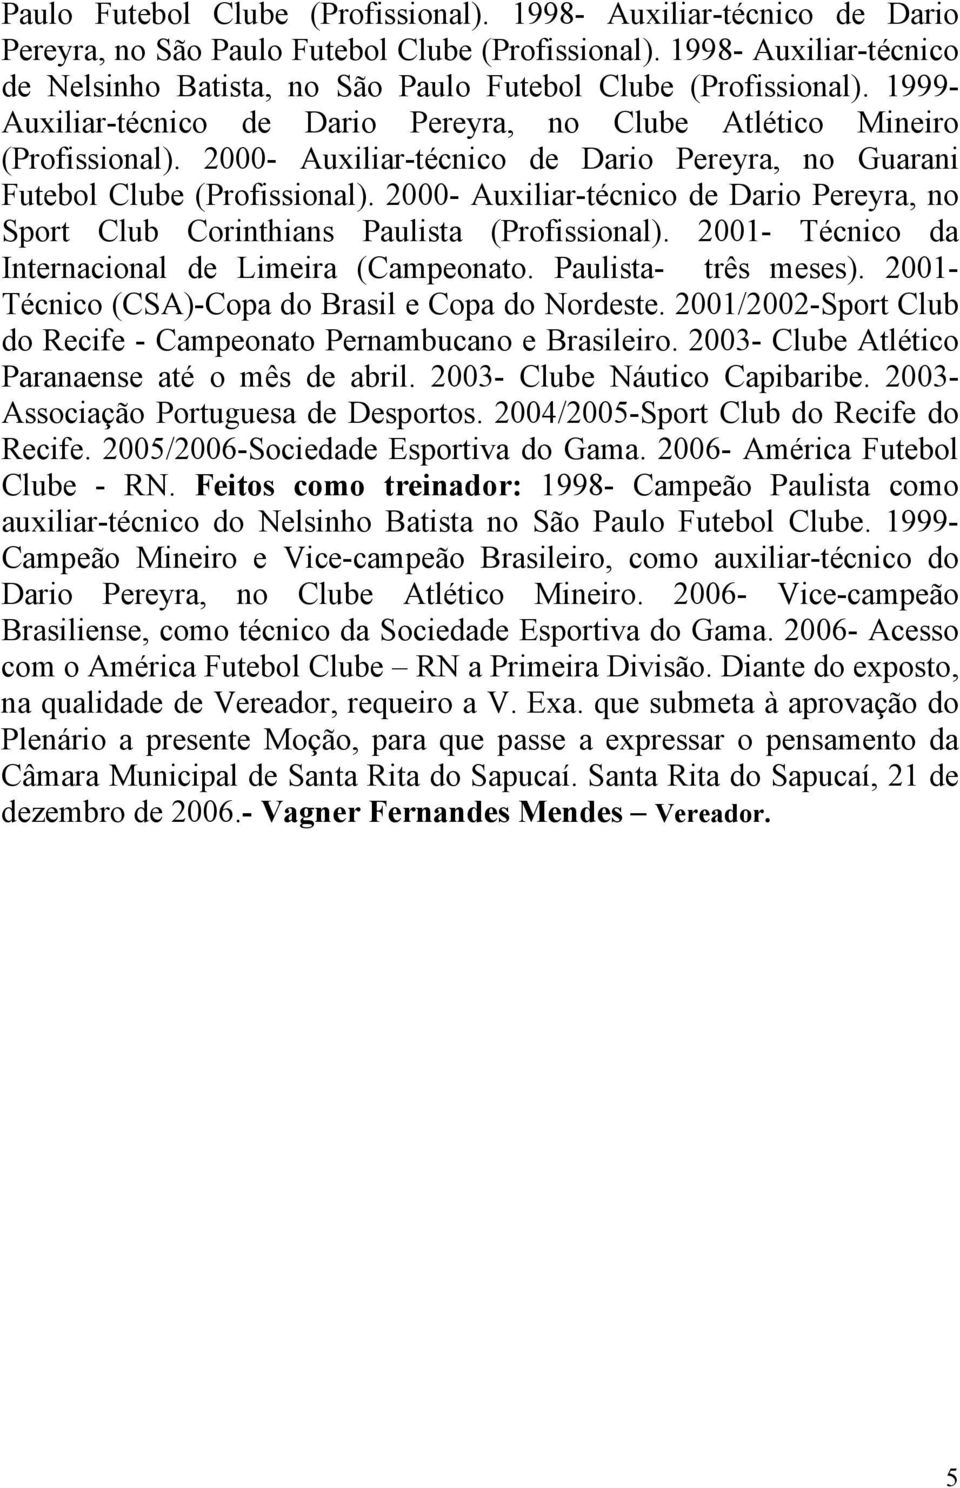 2001- Técnico da Internacional de Limeira (Campeonato. Paulista- três meses). 2001- Técnico (CSA)-Copa do Brasil e Copa do Nordeste.